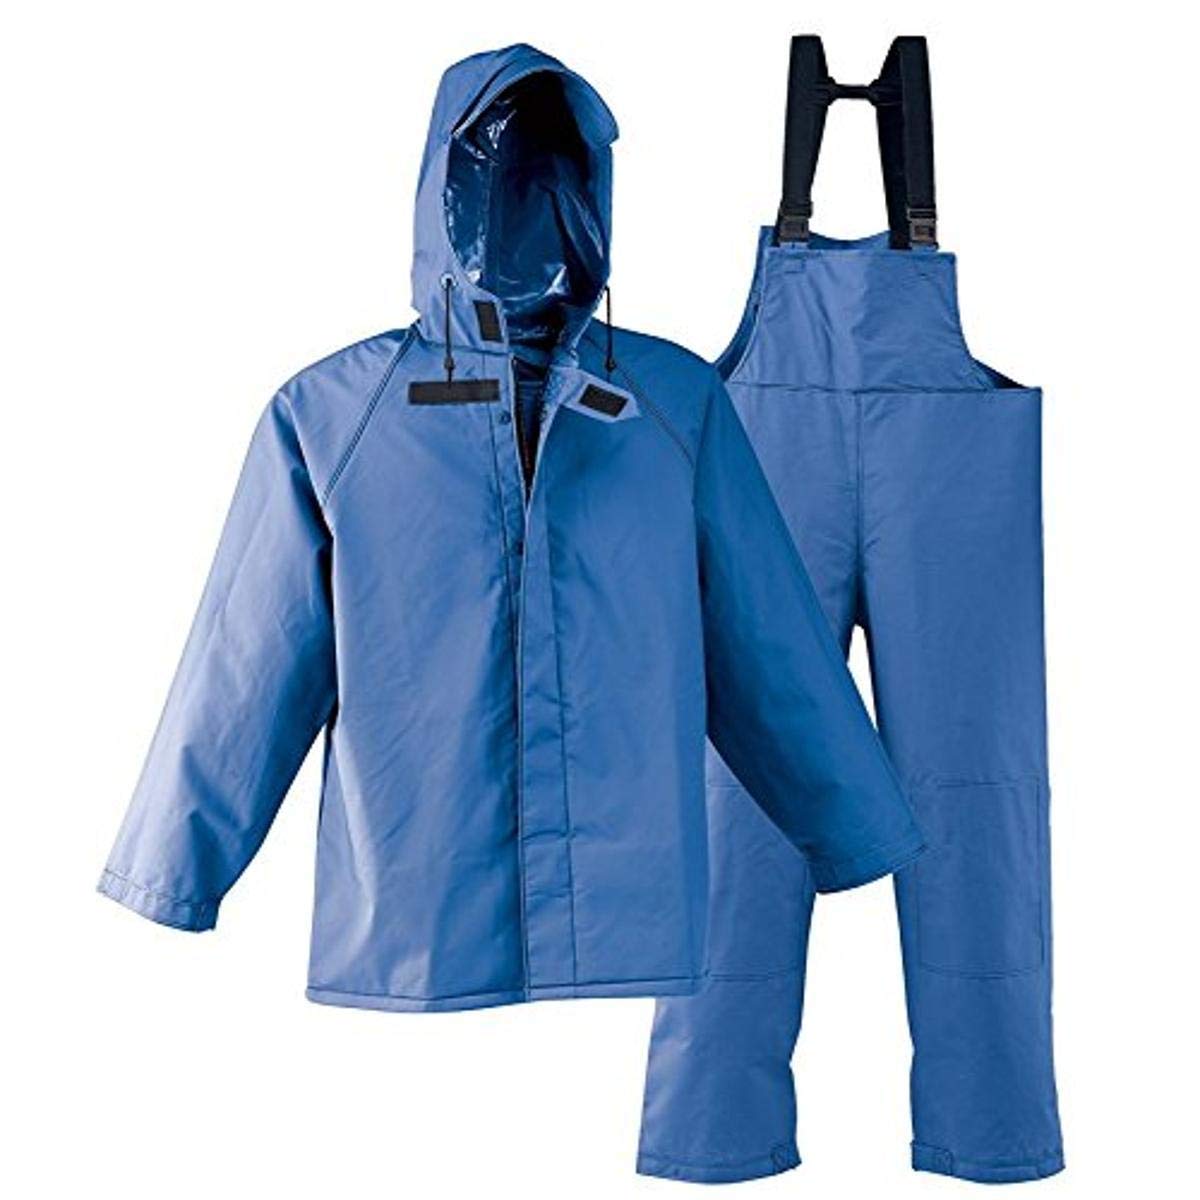 Galeton 7954-XXXL-BL 7954 Repel Rainwear 0.50 mm PVC 3-Layer Fishermans Rain Suit, Blue, 3X-Large